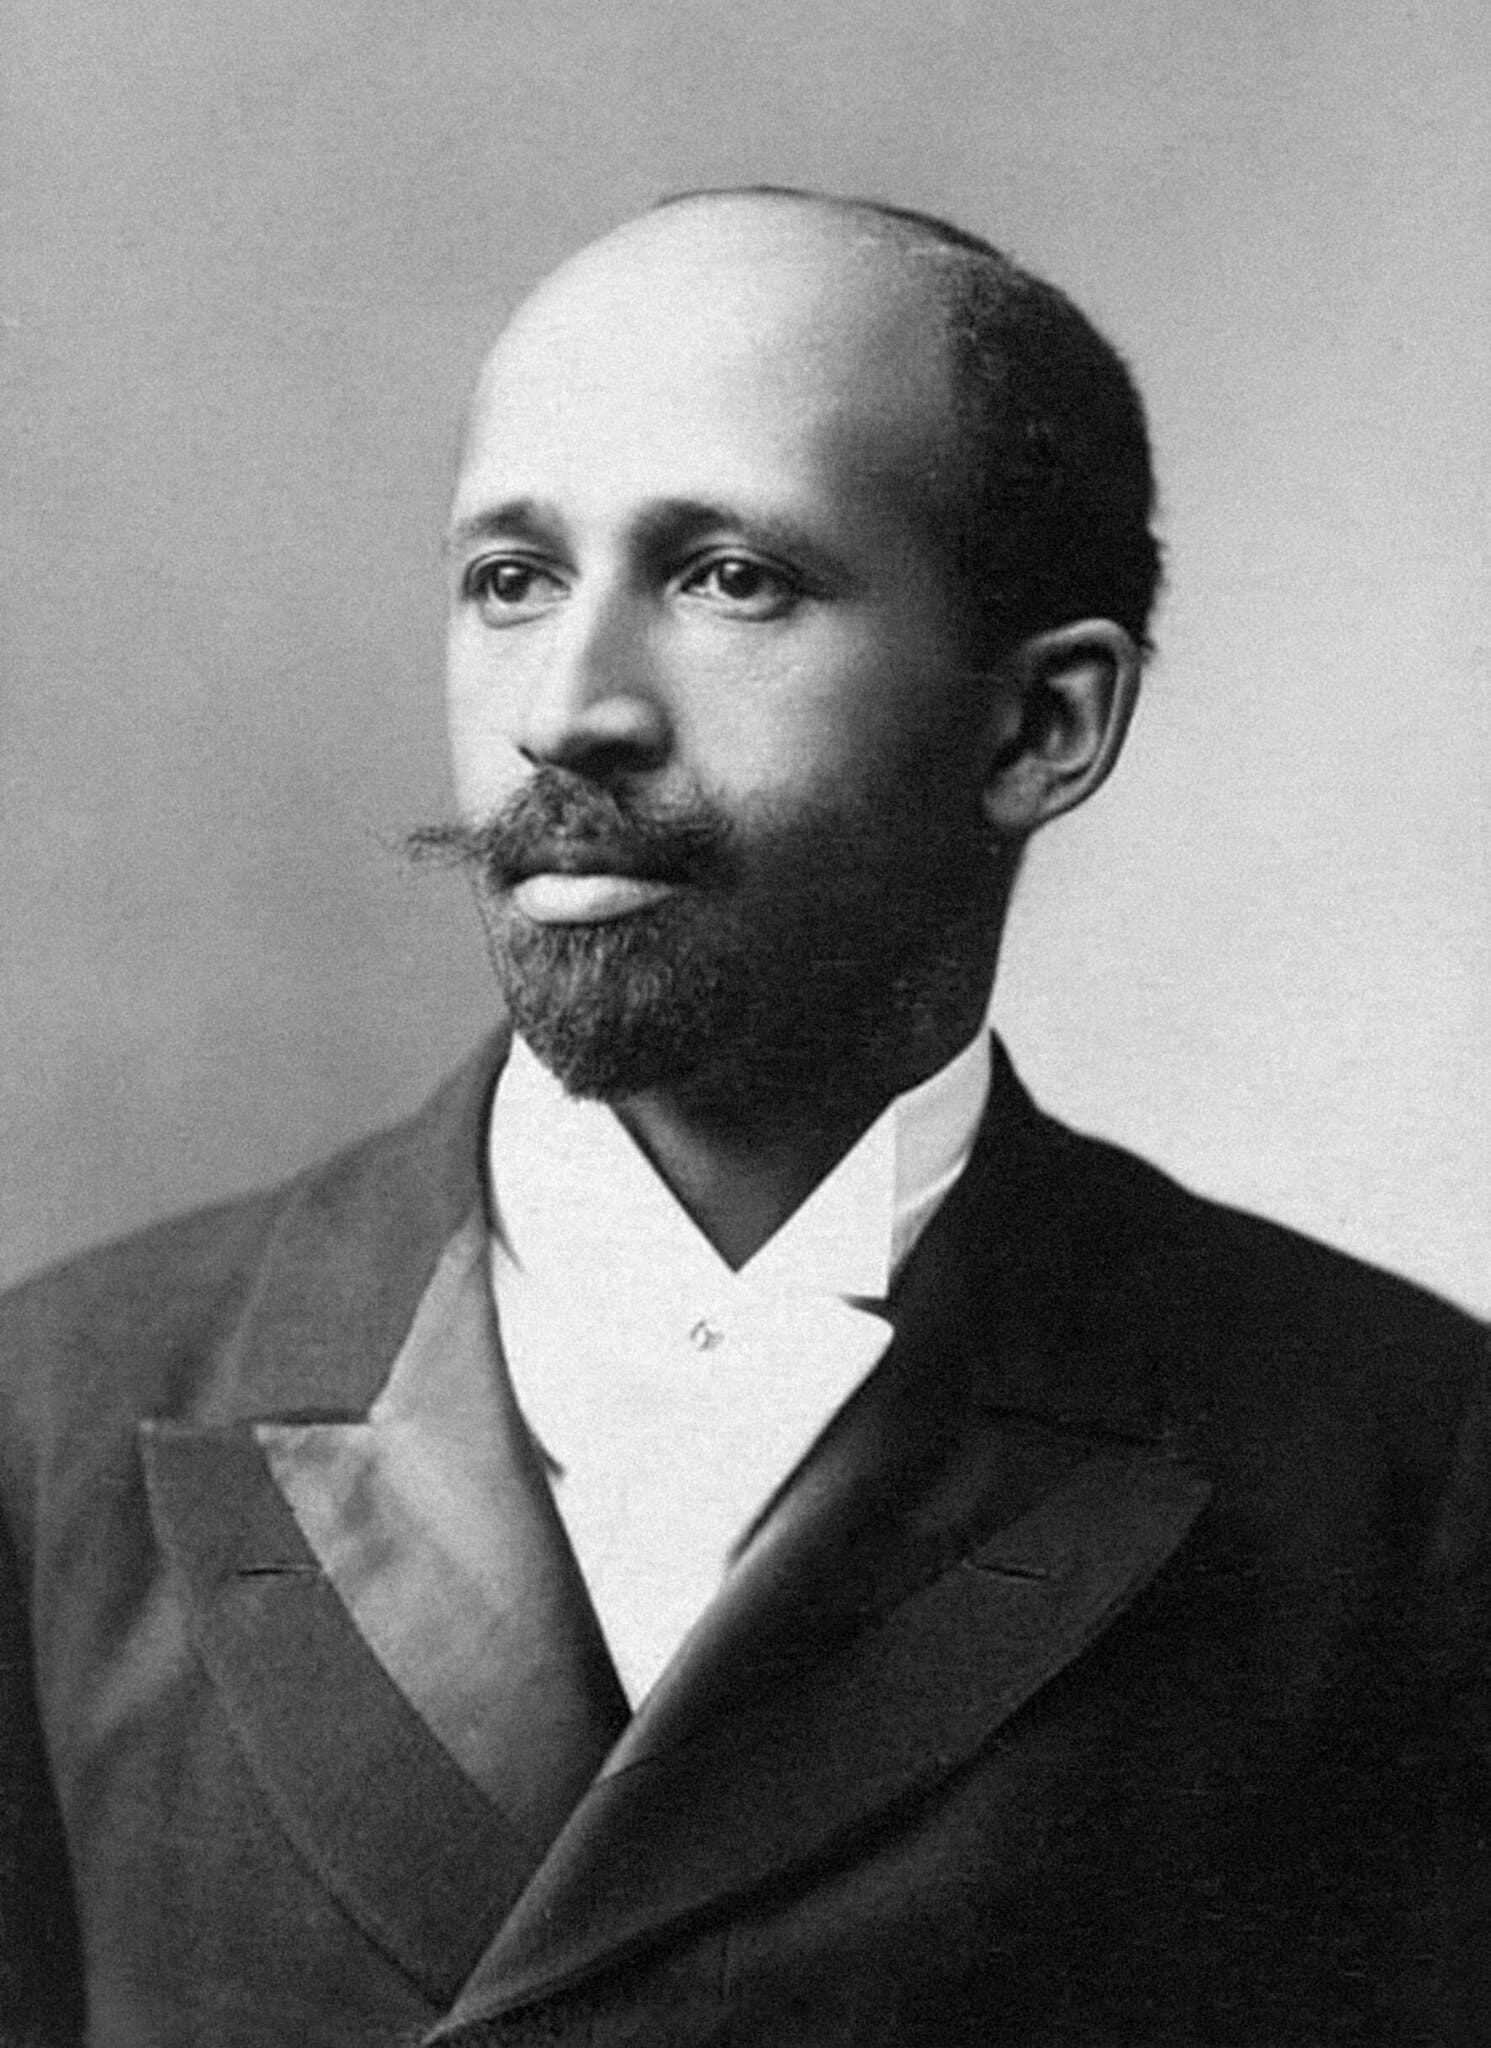 Black and white image of W.E.B. Du Bois